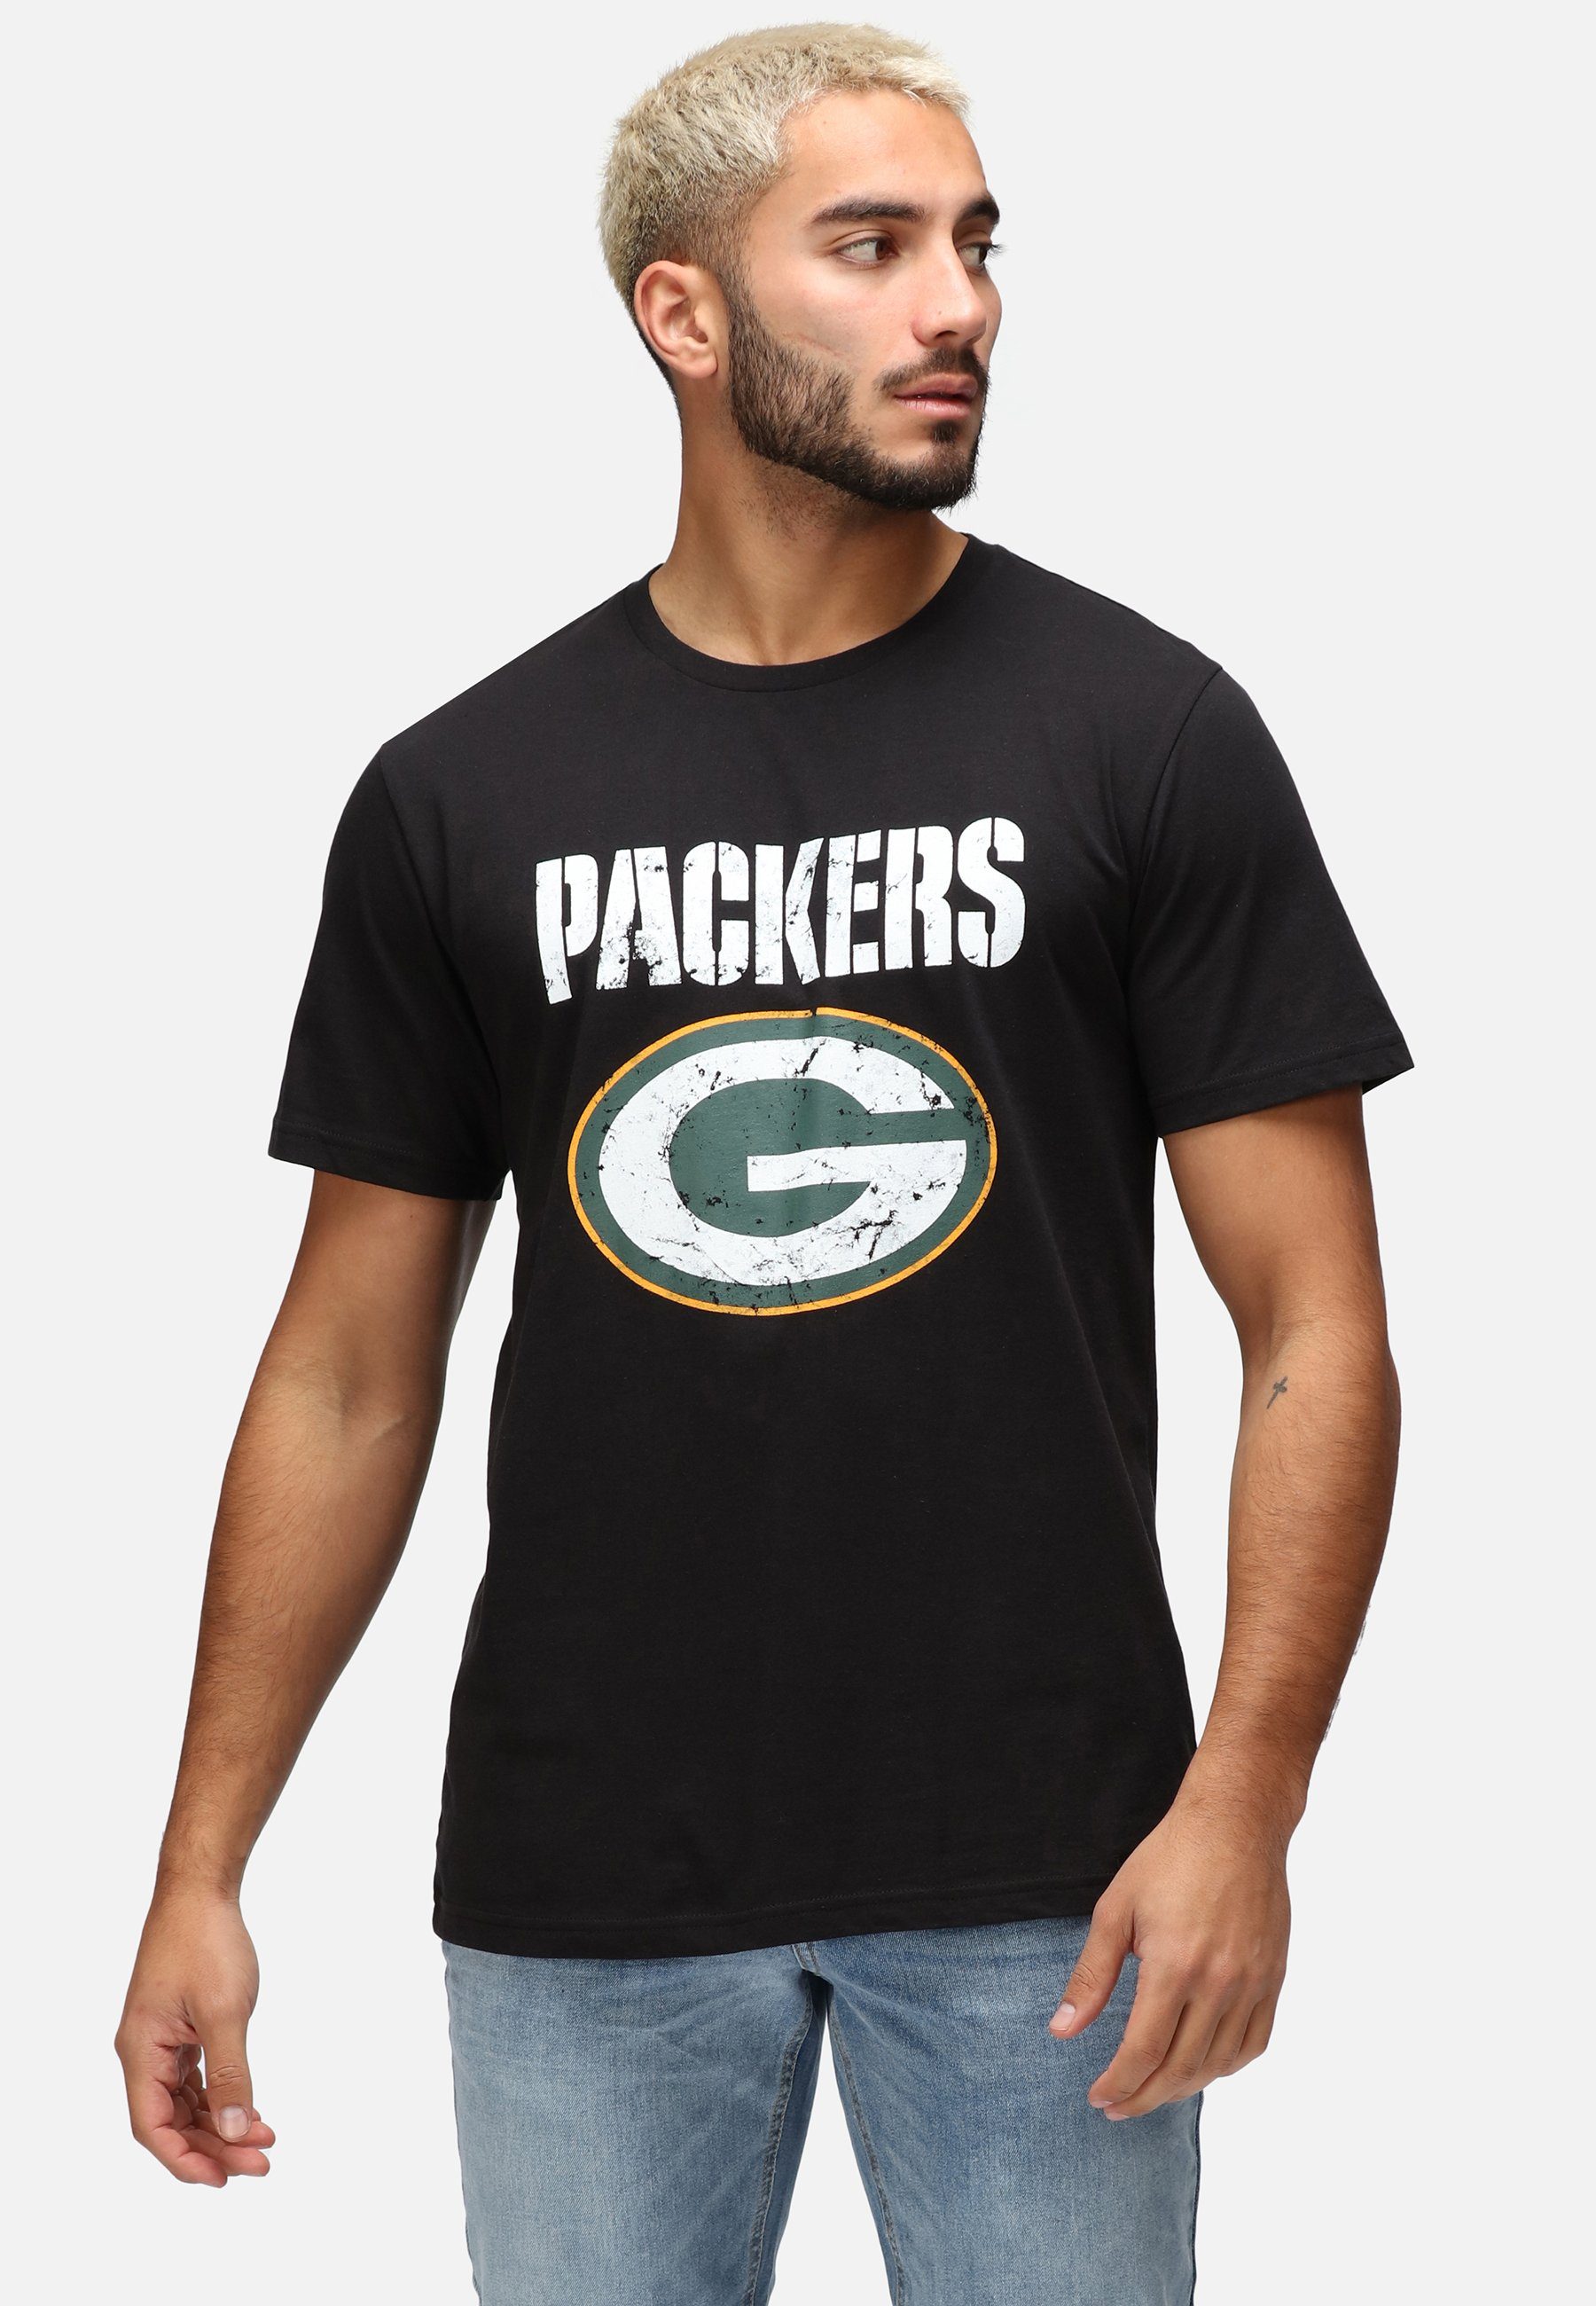 GOTS PACKERS LOGO zertifizierte T-Shirt NFL Bio-Baumwolle Recovered